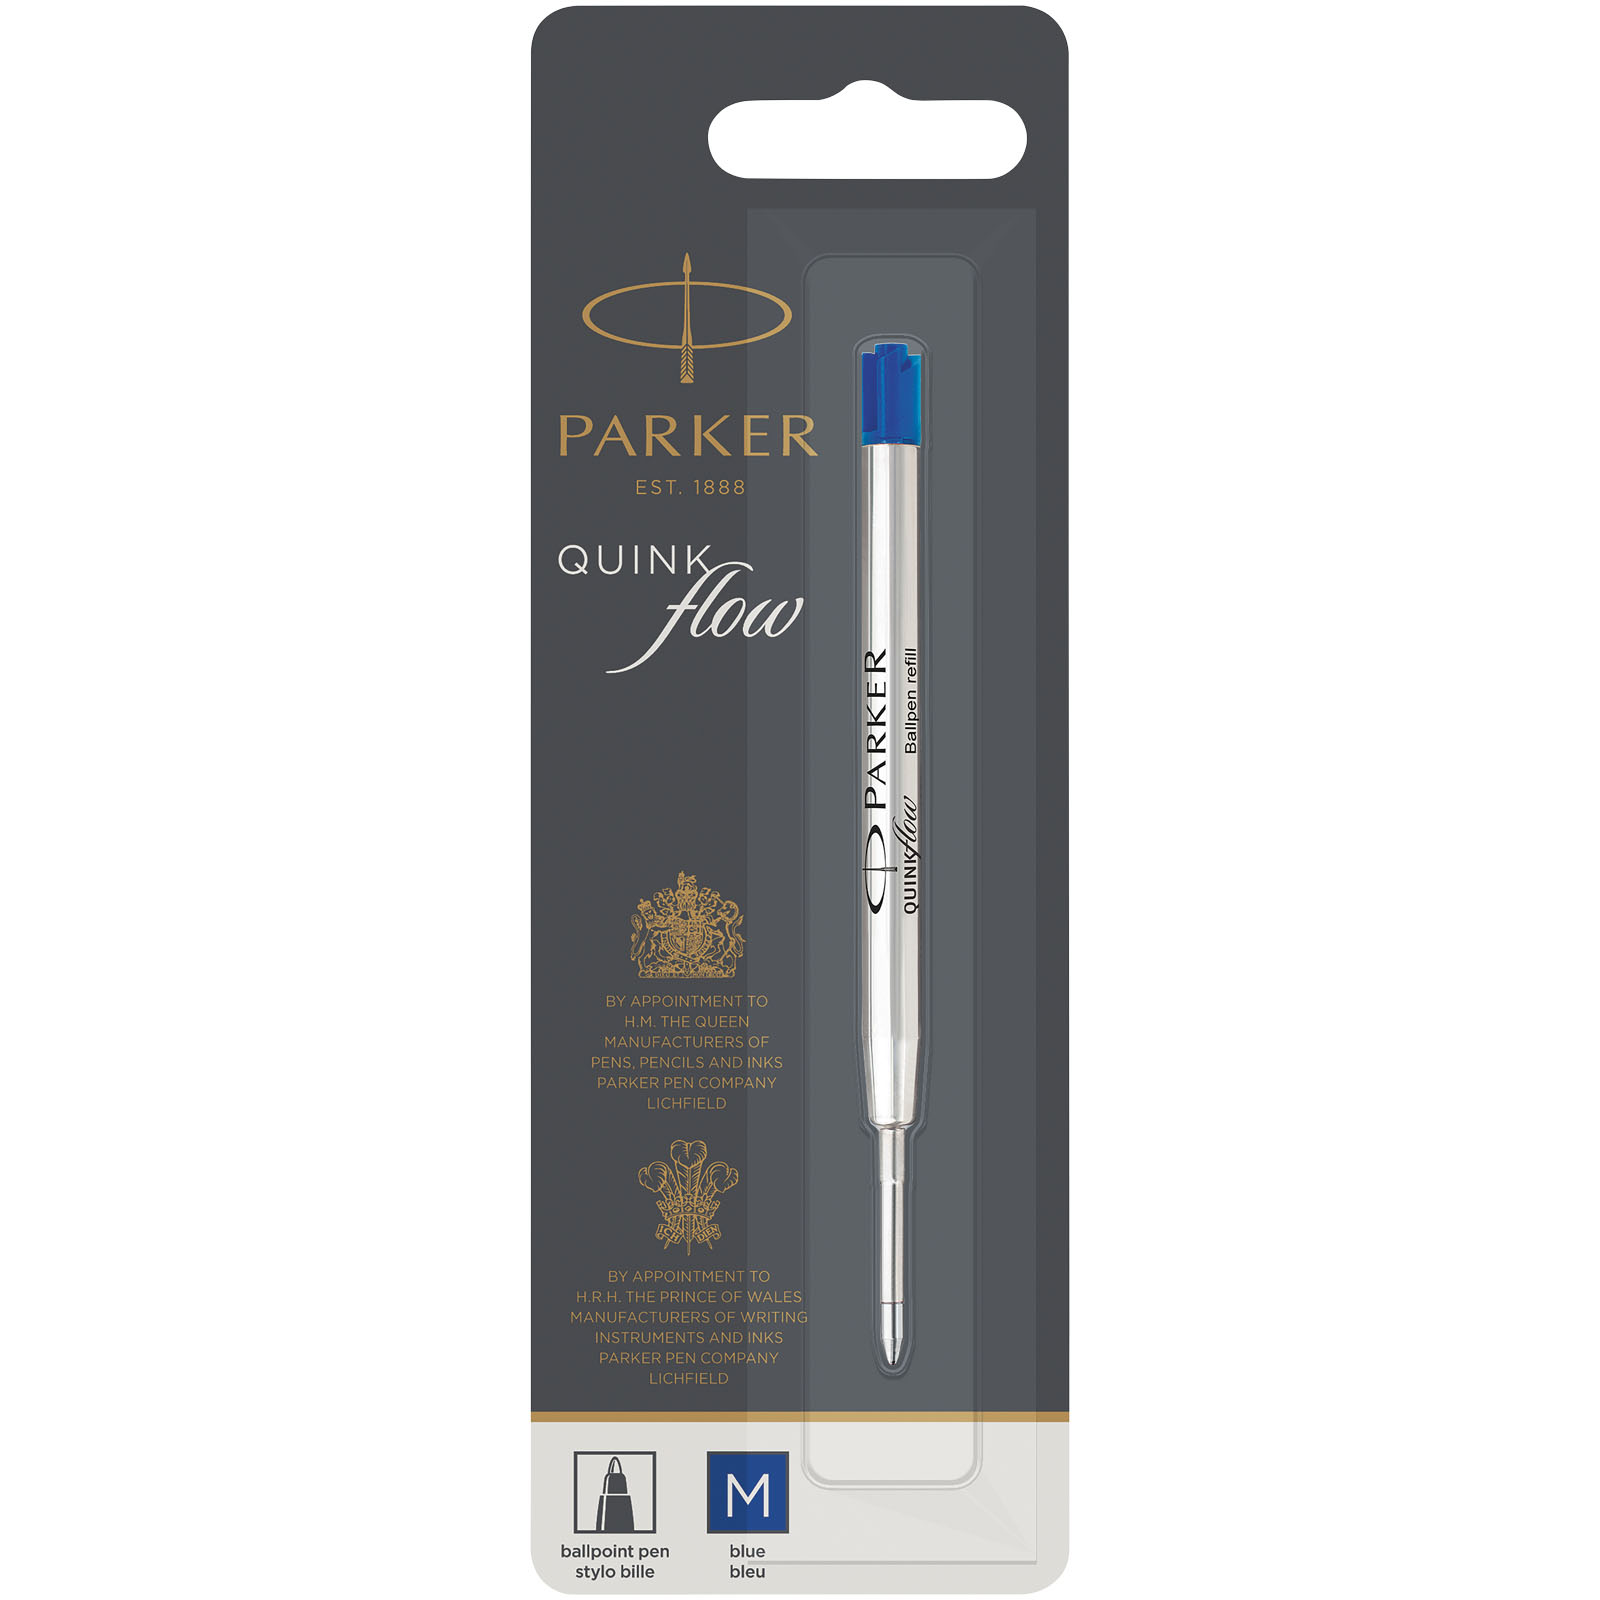 Pens & Writing - Parker Quinkflow ballpoint pen refill